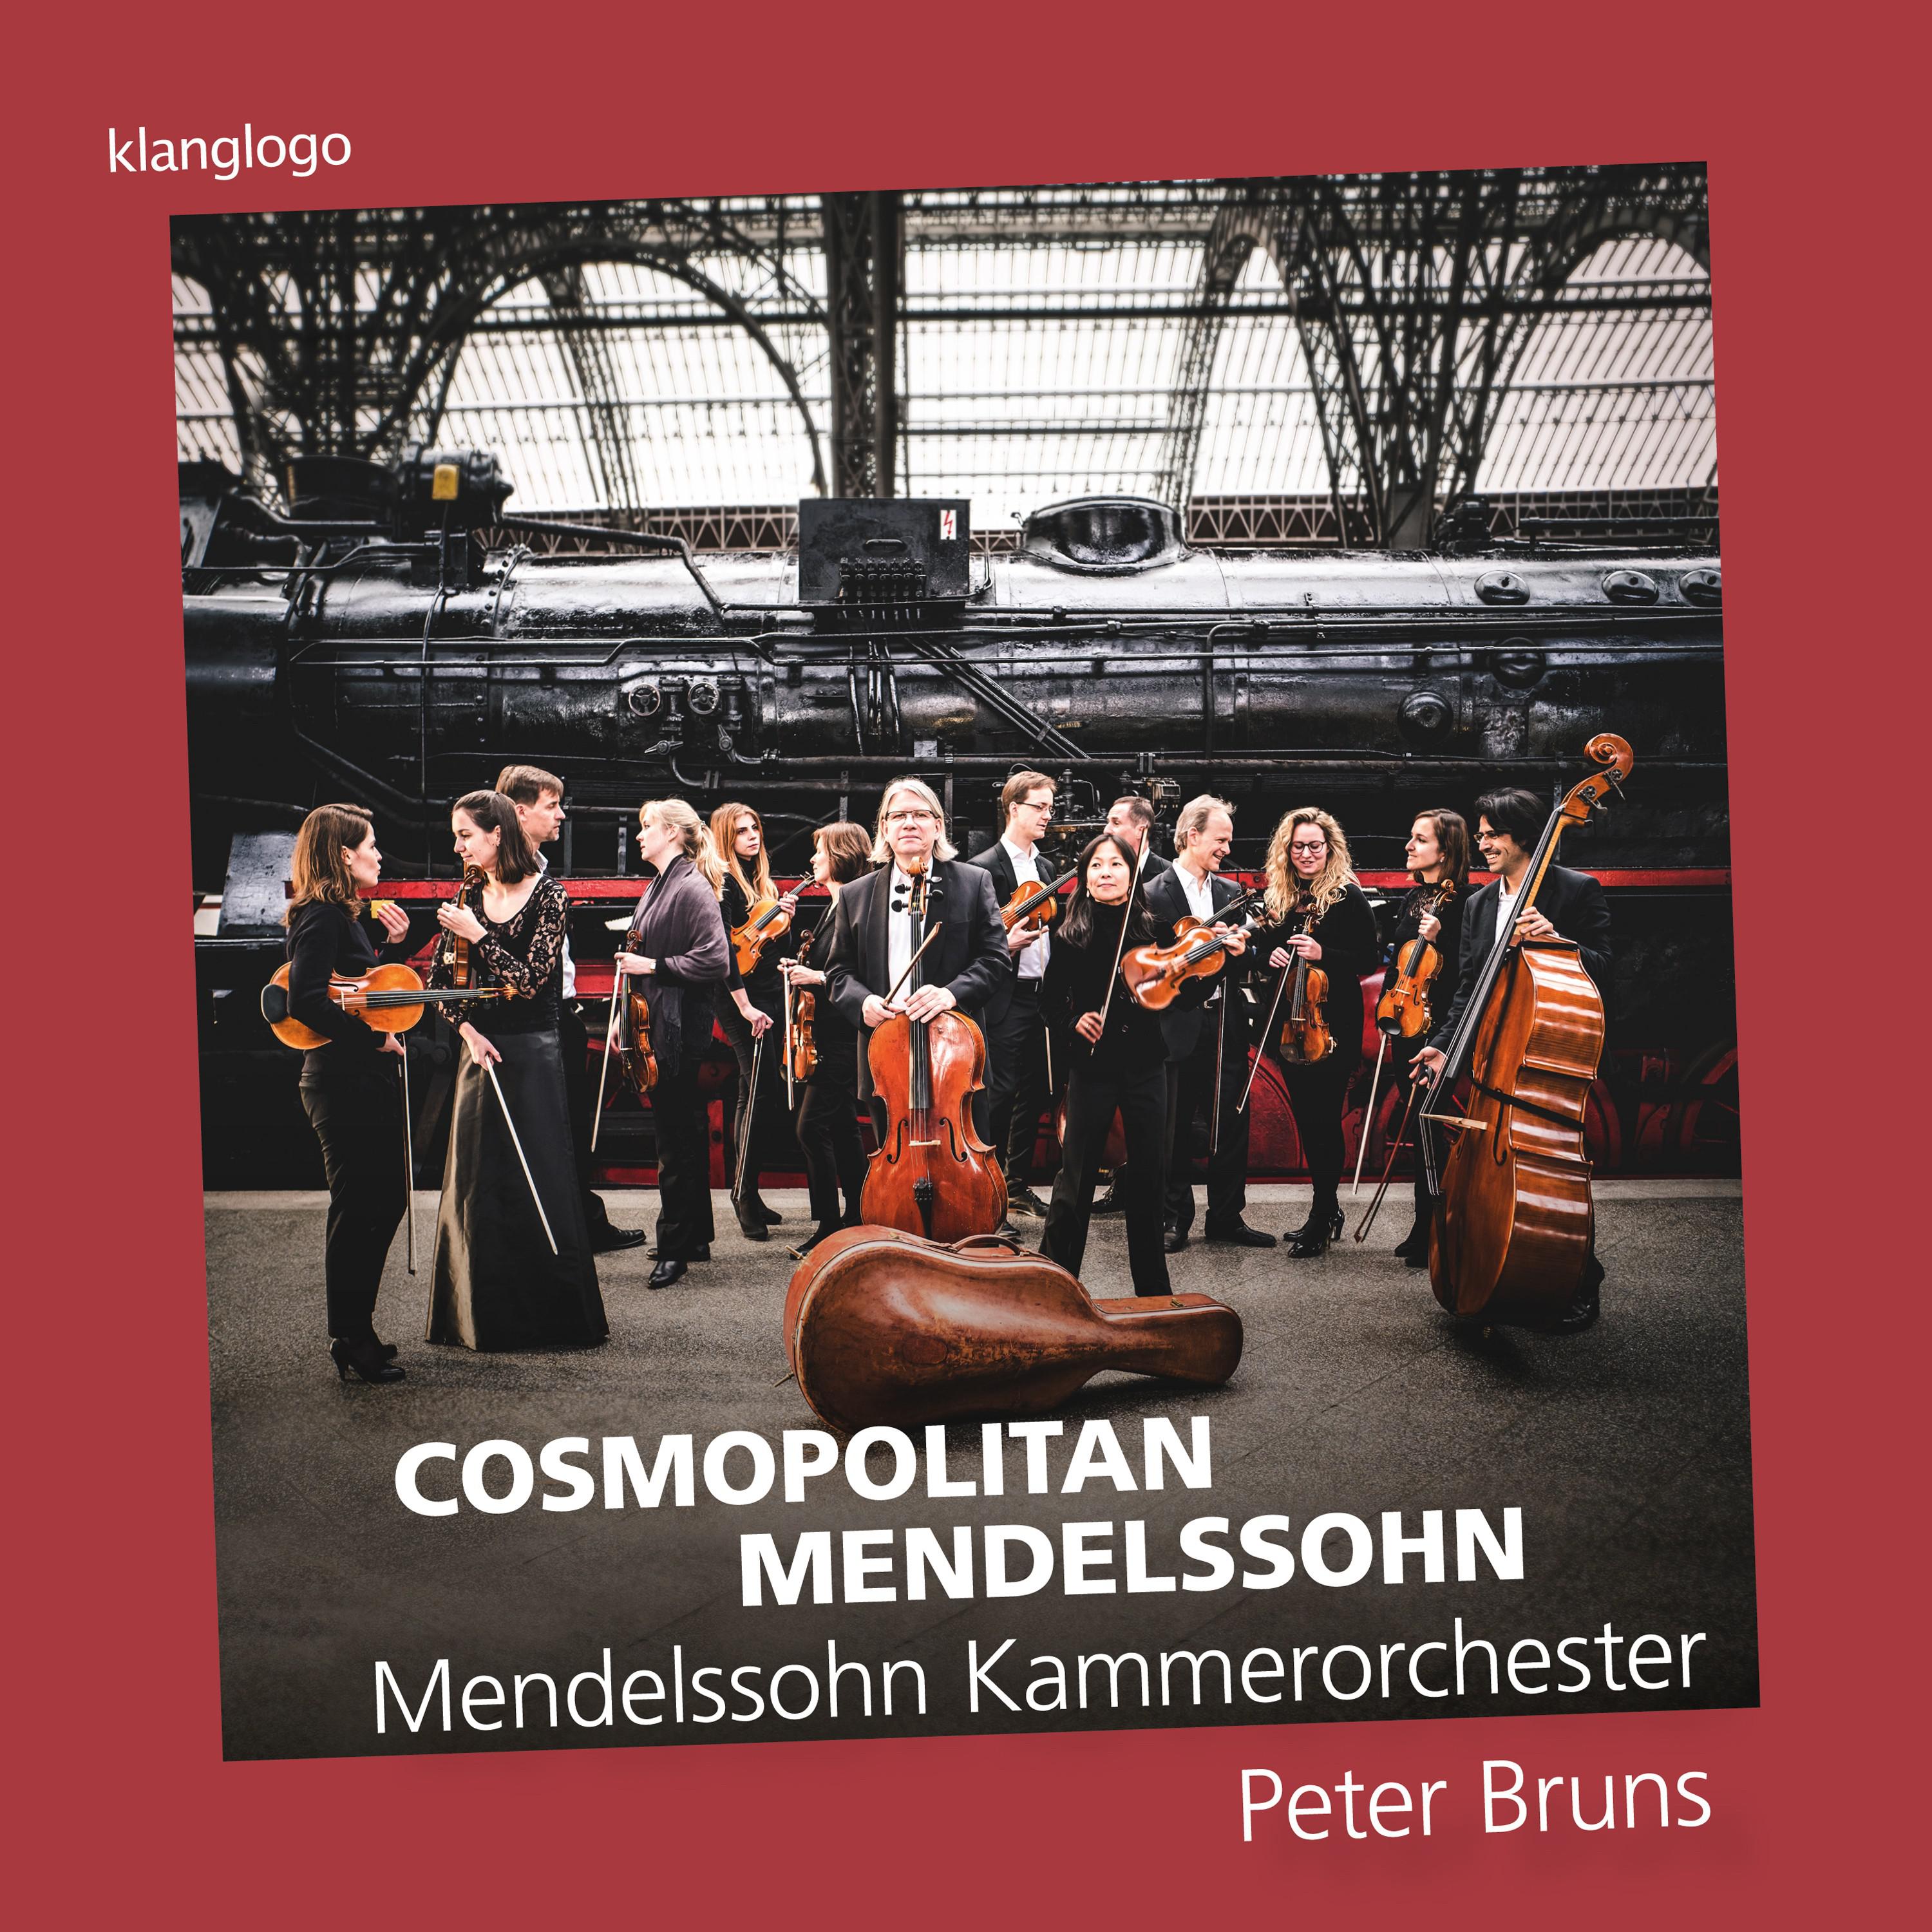 Mendelssohn Kammerorchester Leipzig - Serenade No. 3, Op. 69